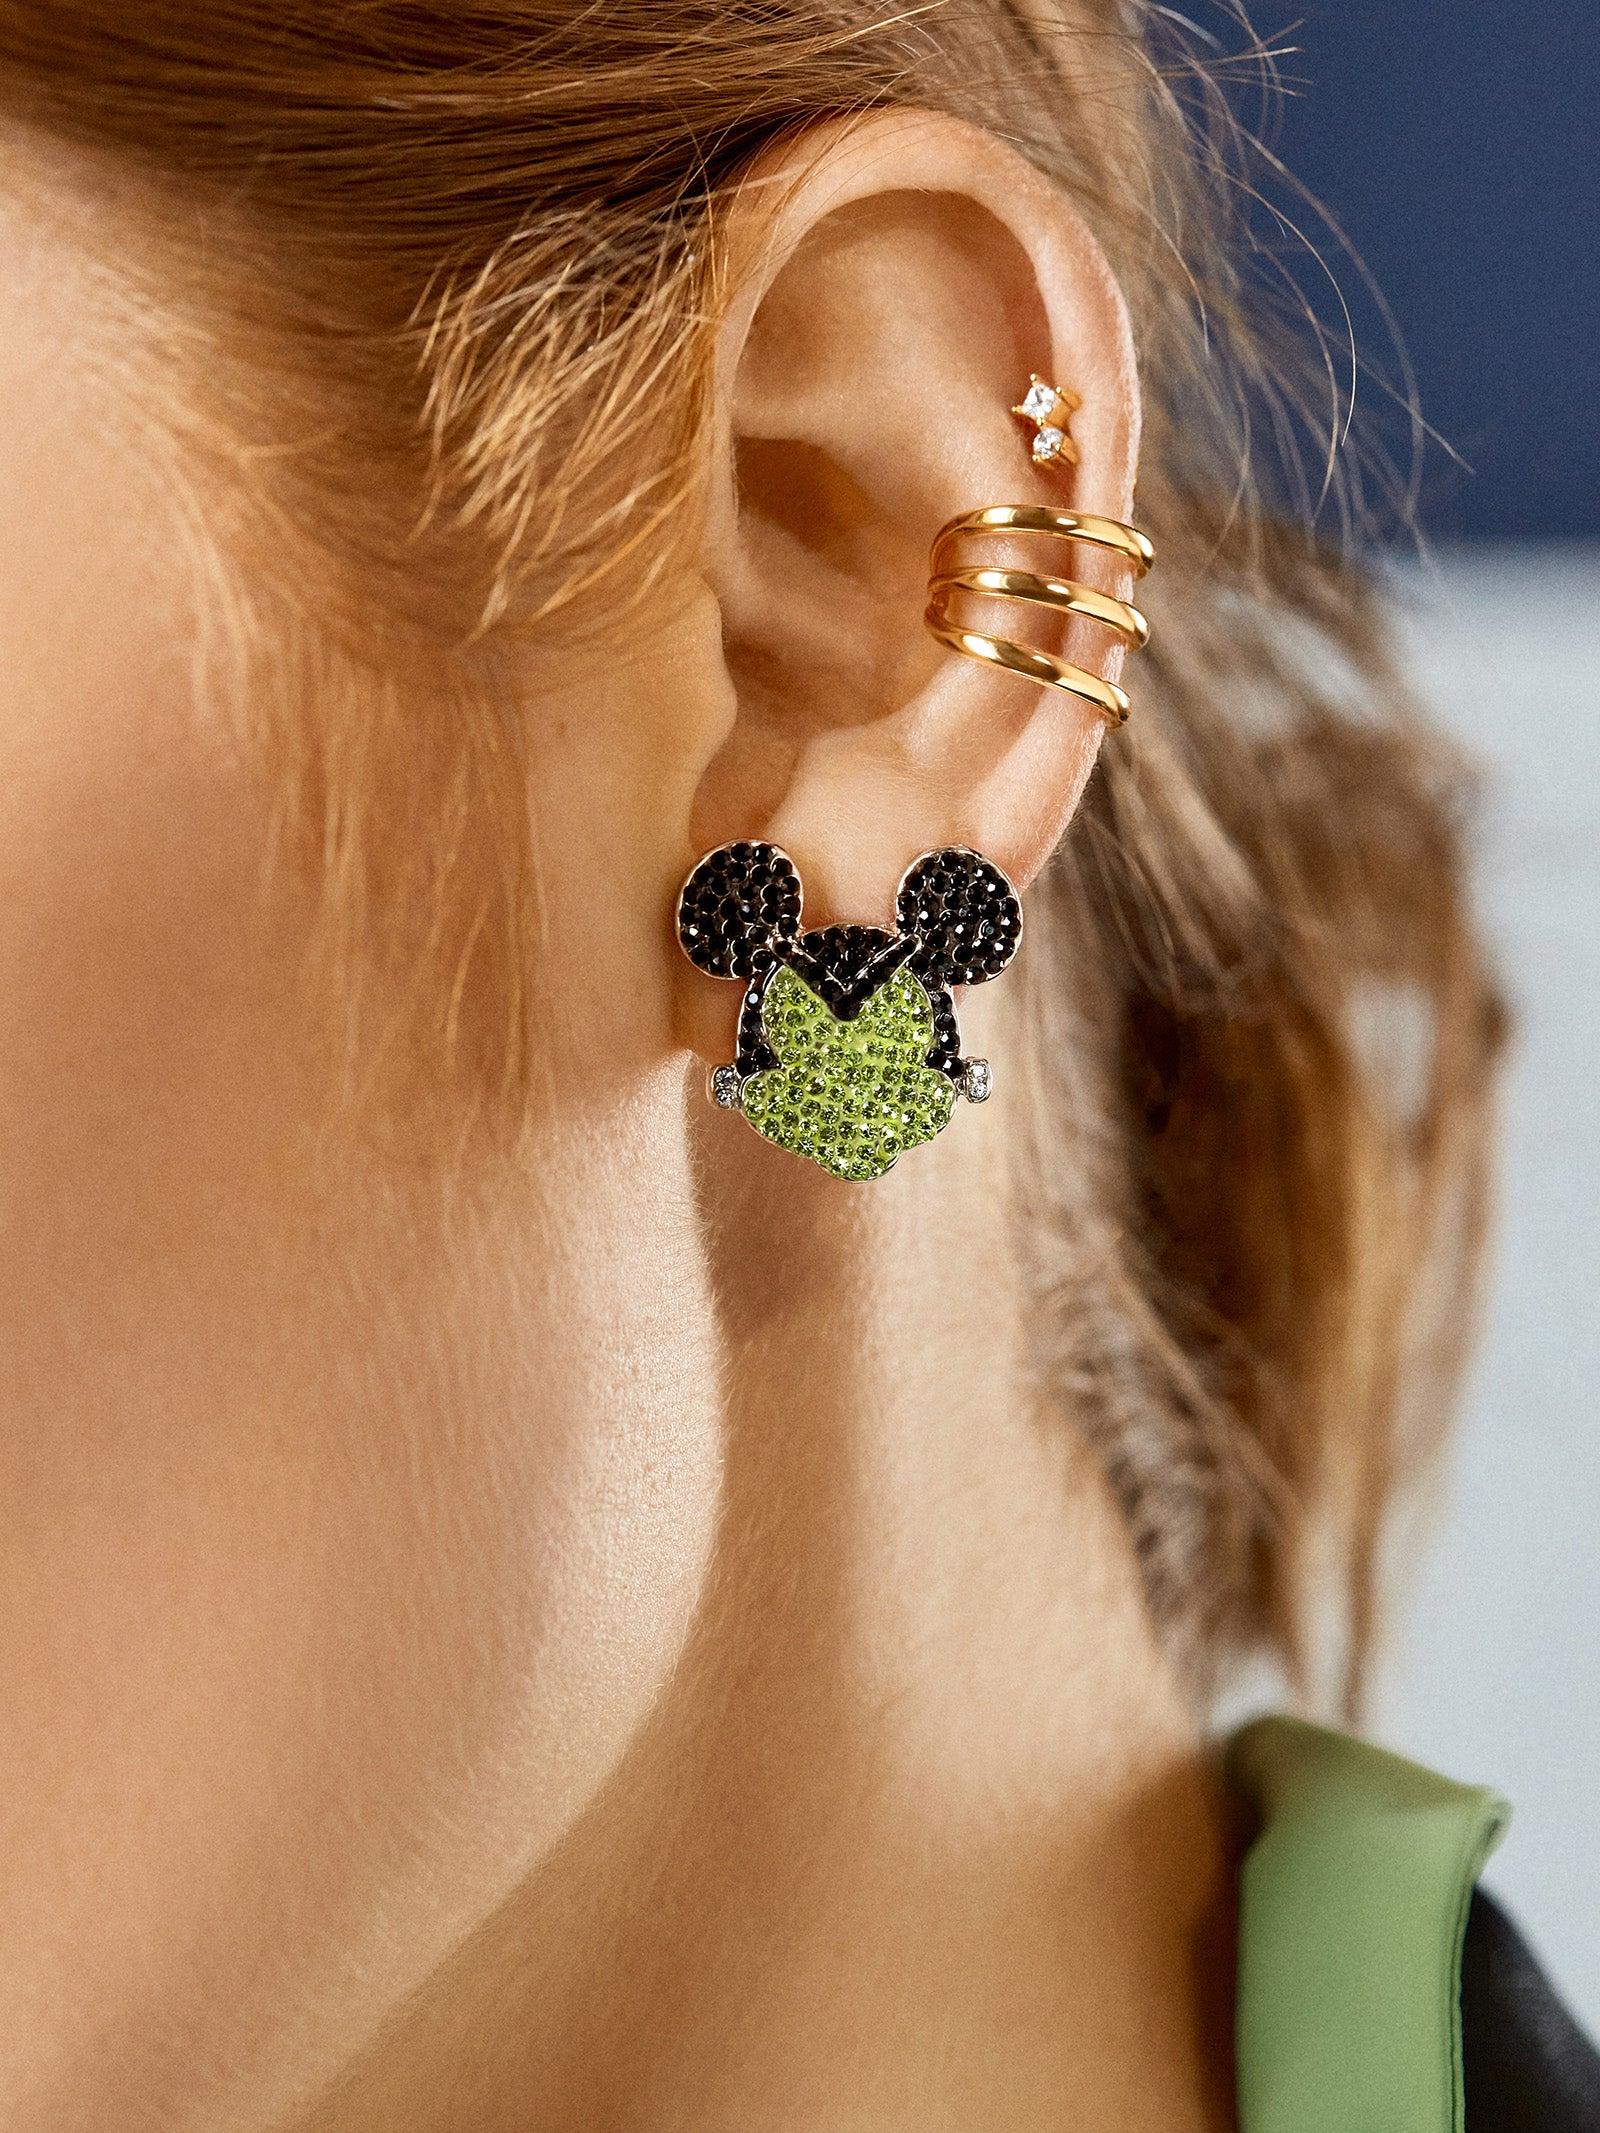 Brown Monogram Minnie Ears, Crystal Minnie Ears, Disney Mickey